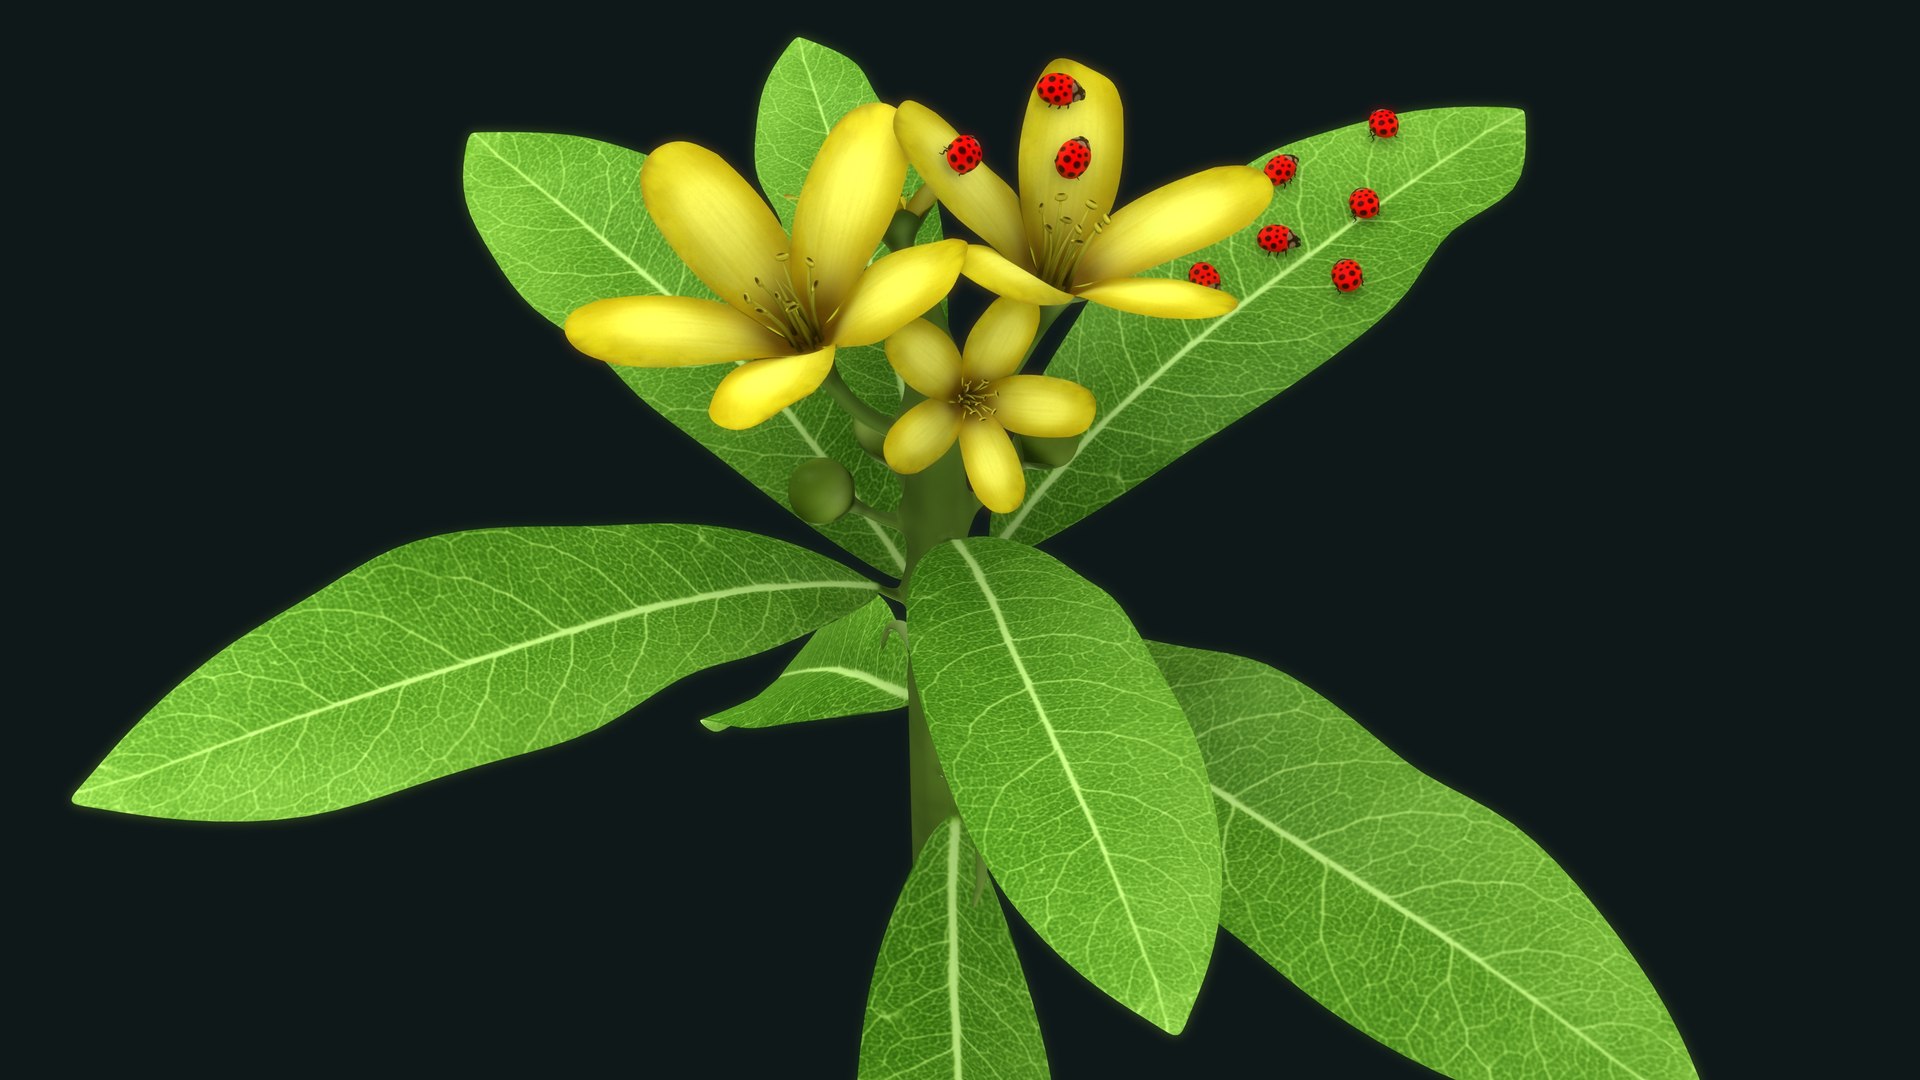 3D model Malpighiaceae flower and ladybug https://p.turbosquid.com/ts-thumb/LH/Ft4Oqd/Xb/b0758aggregation_airl/jpg/1632573873/1920x1080/fit_q87/491537f1a47e255e0bb40ae0a4571ec6976c470e/b0758aggregation_airl.jpg